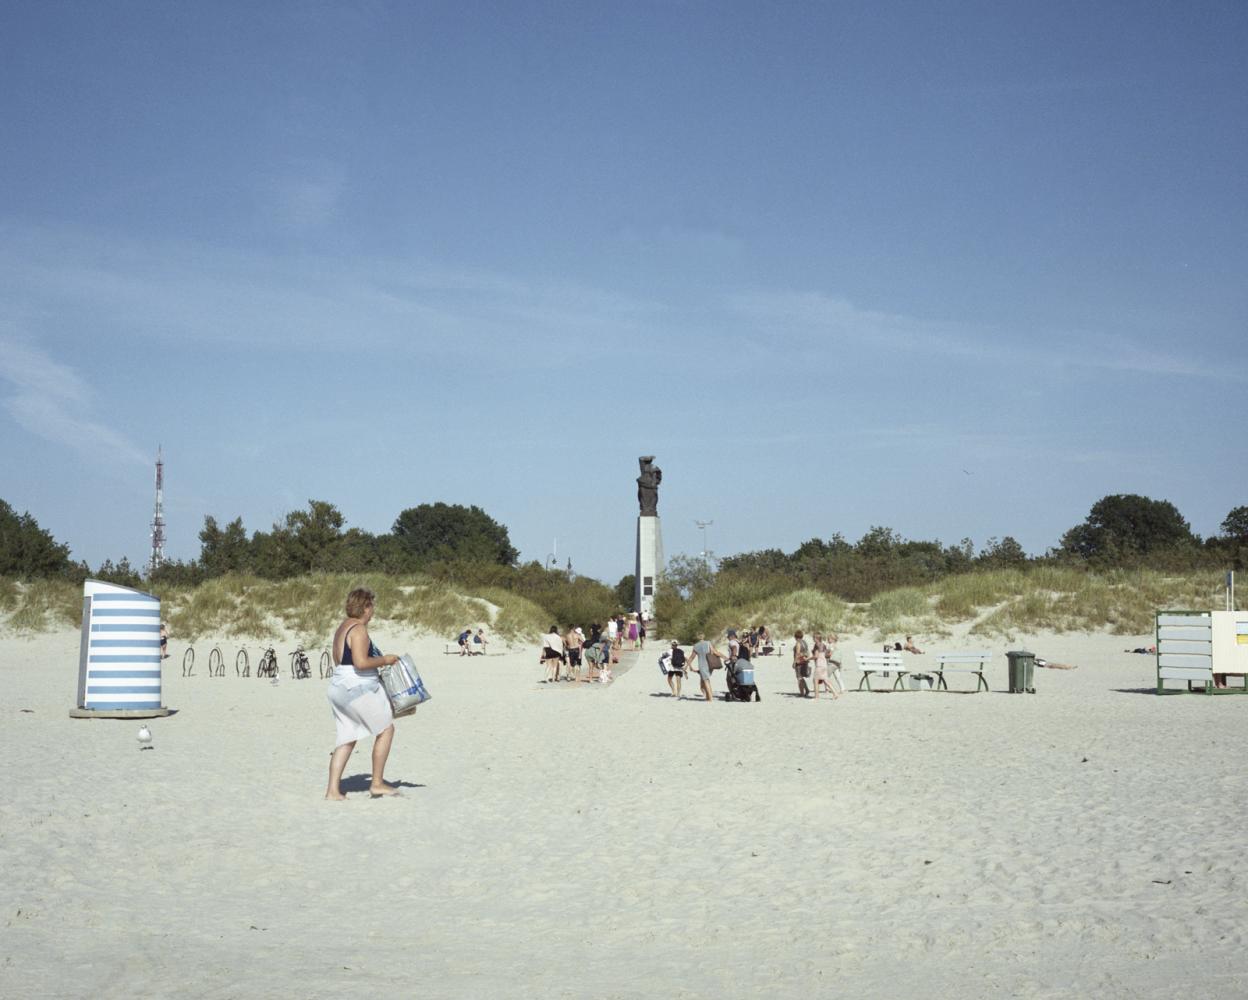 Domestic Borers of Europe -  Latvia, Liepaja. August 2020. A view of Liepaja beach....